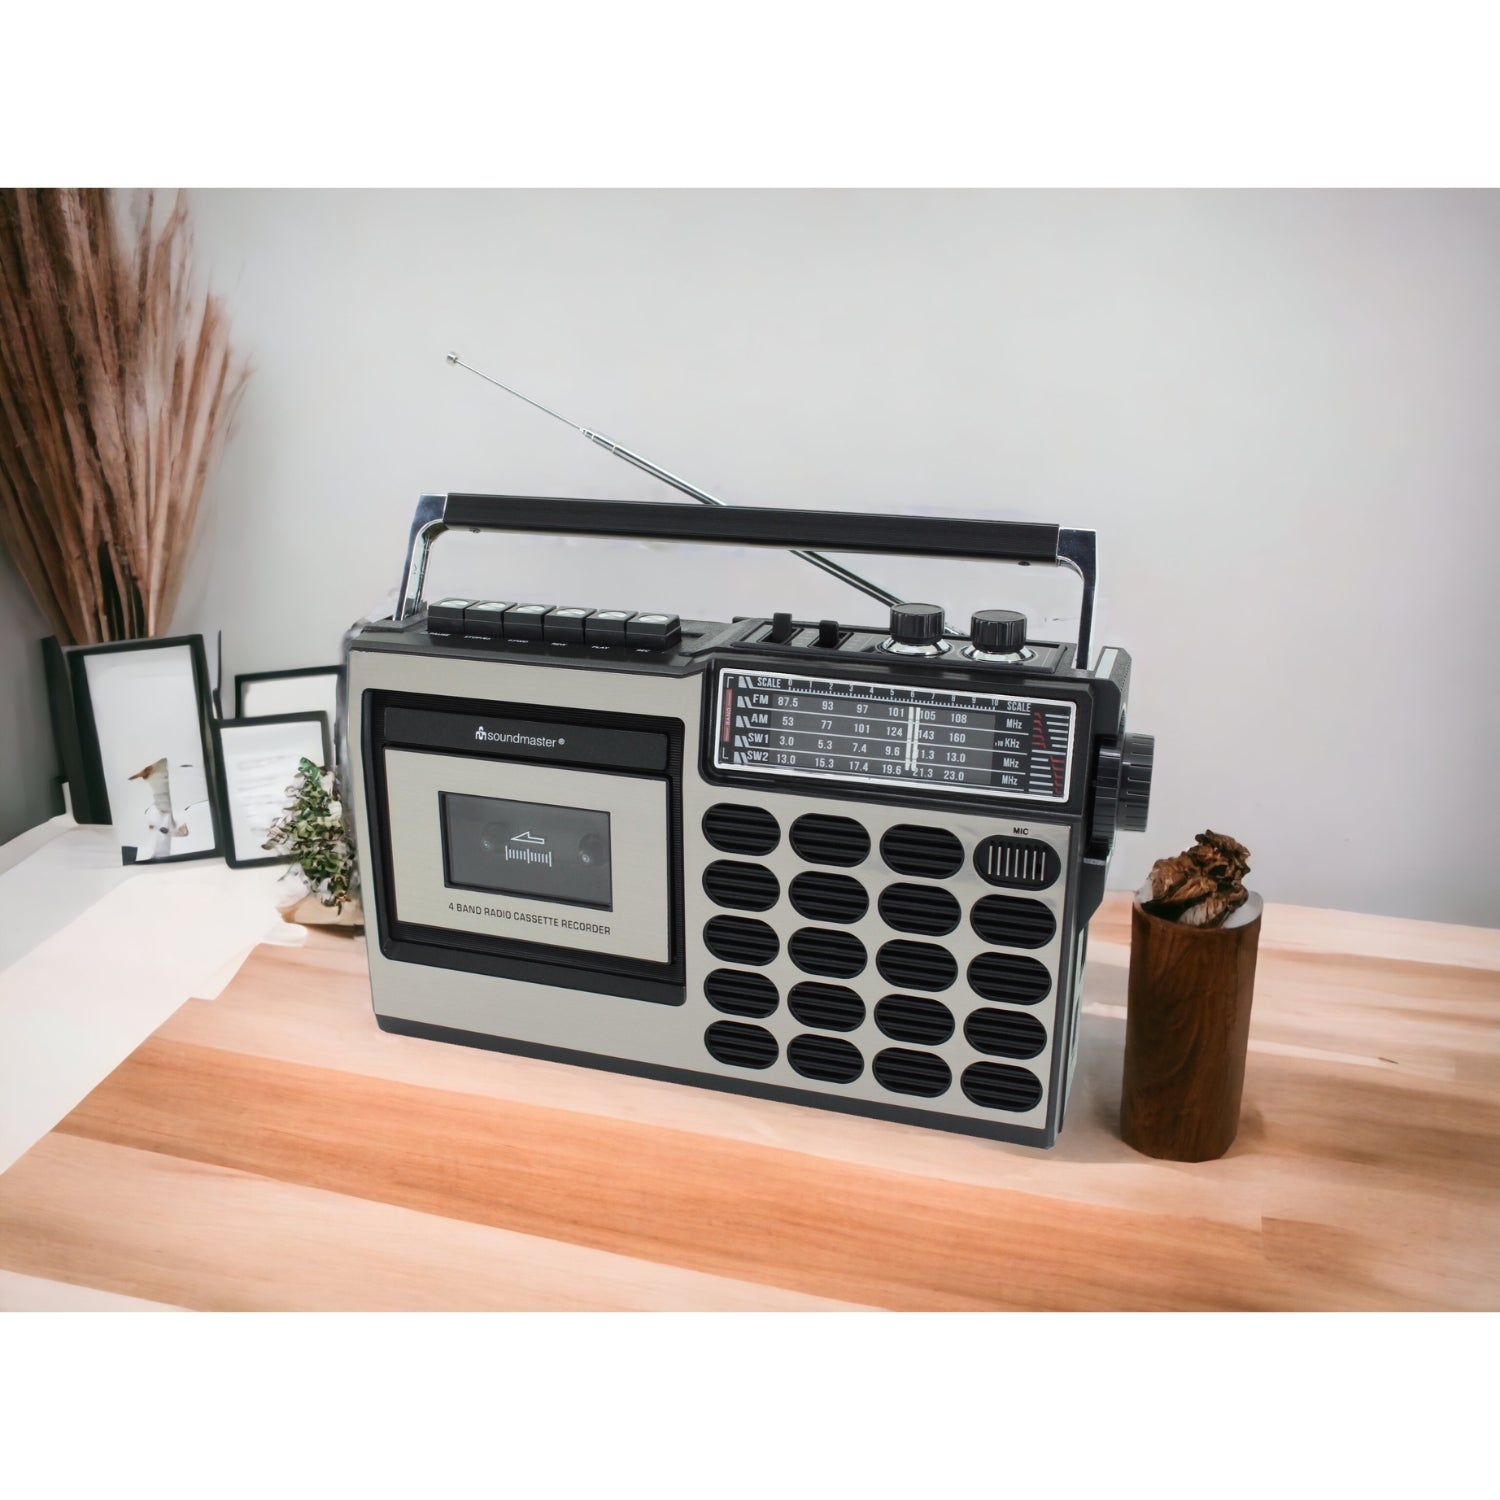 Soundmaster RR18SW Retro Radio Cassette Recorder with USB/SD recording